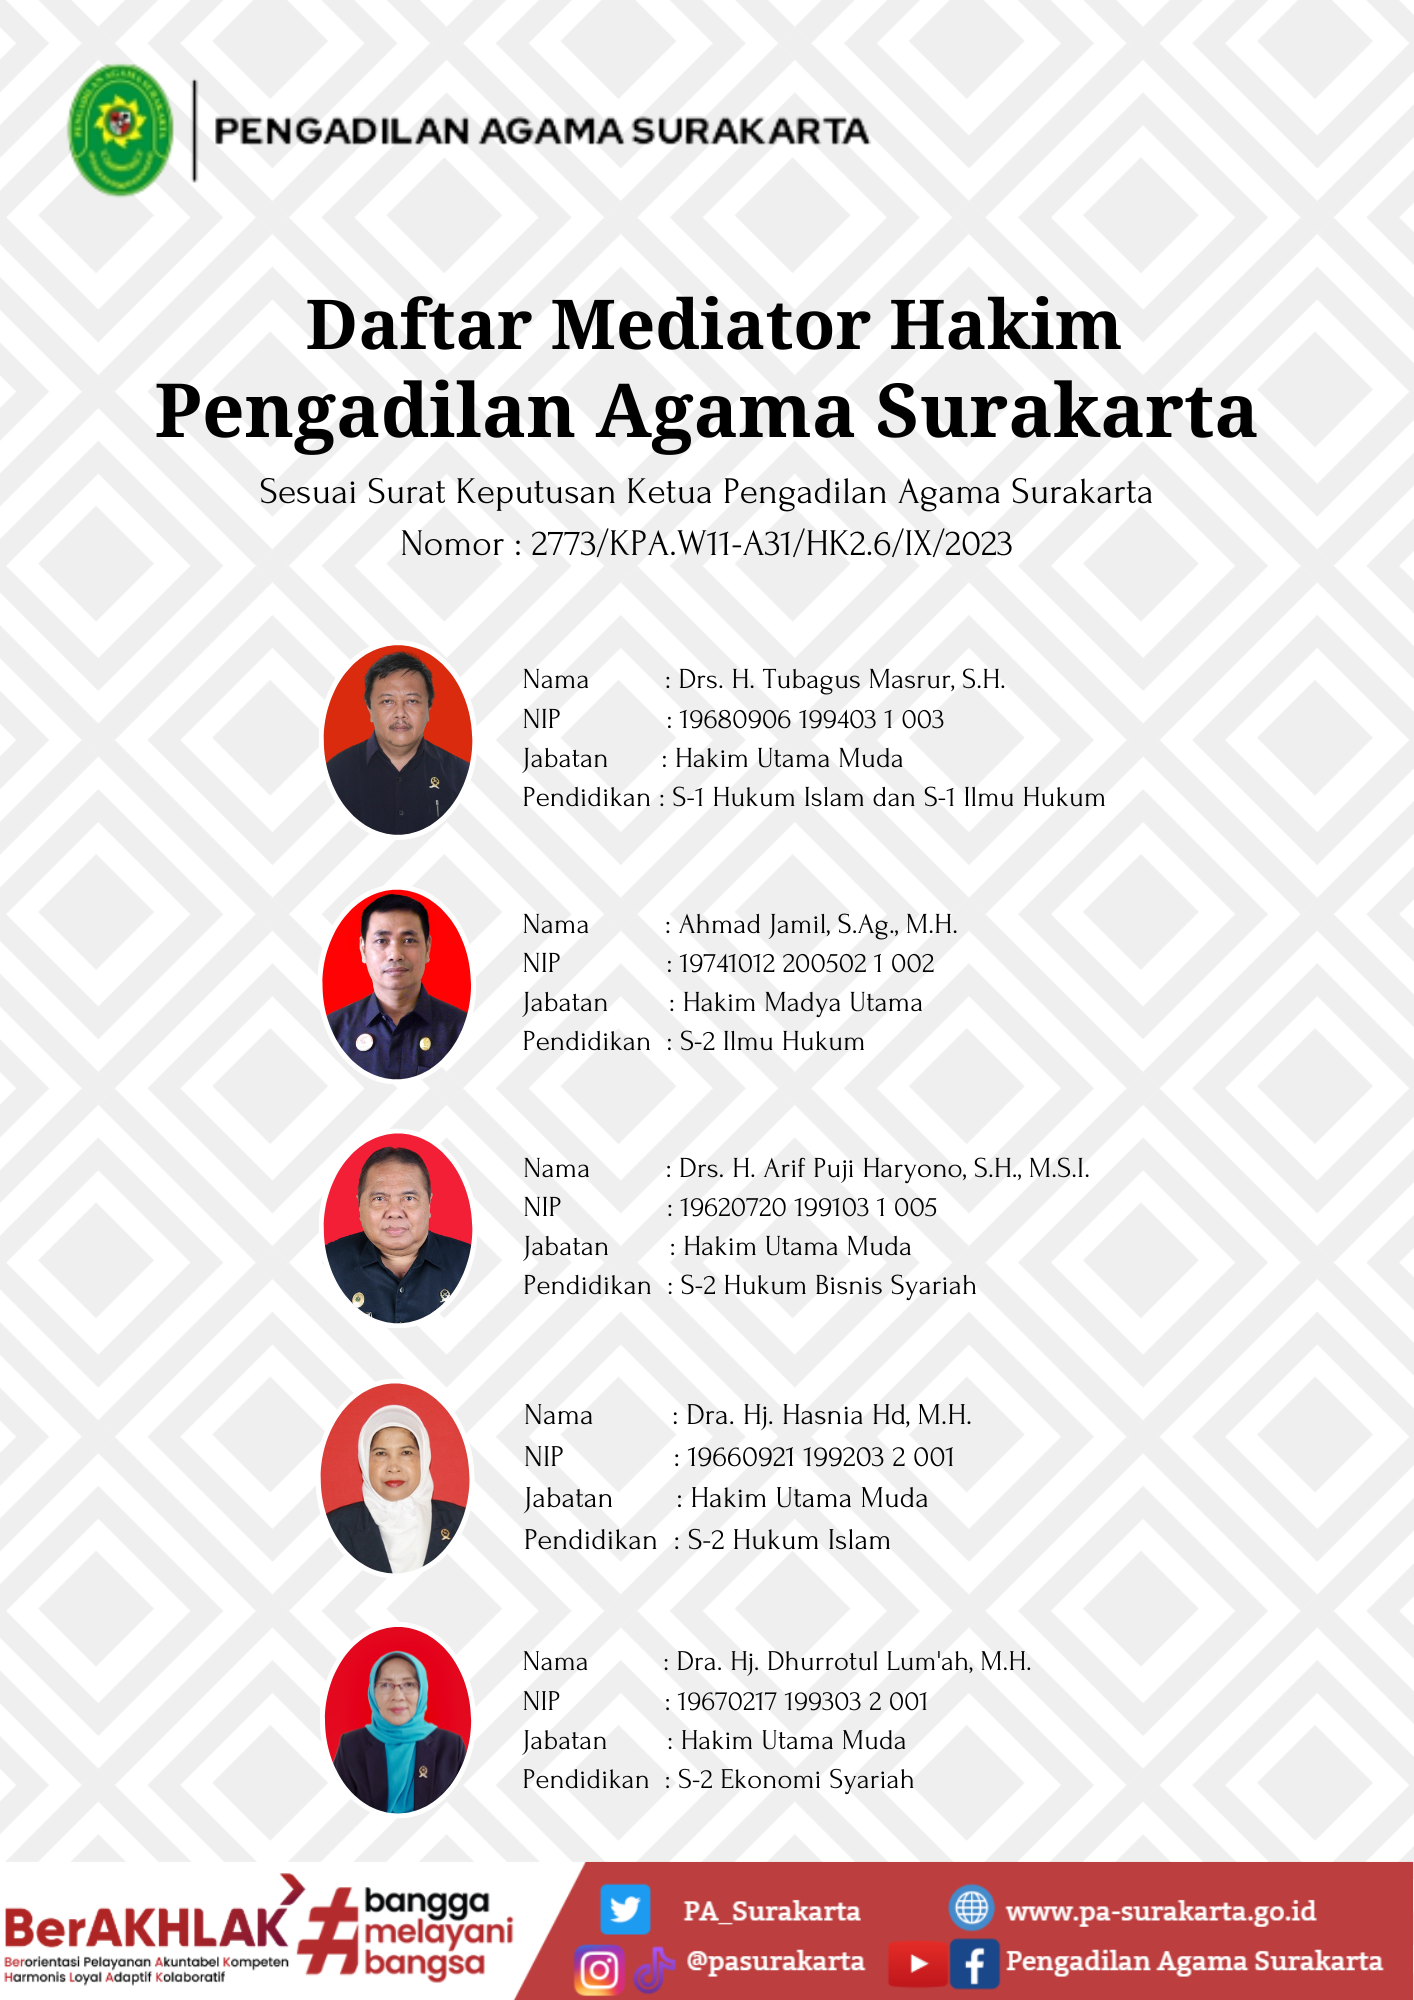 Daftar Mediator Hakim Pengadilan Agama Surakarta